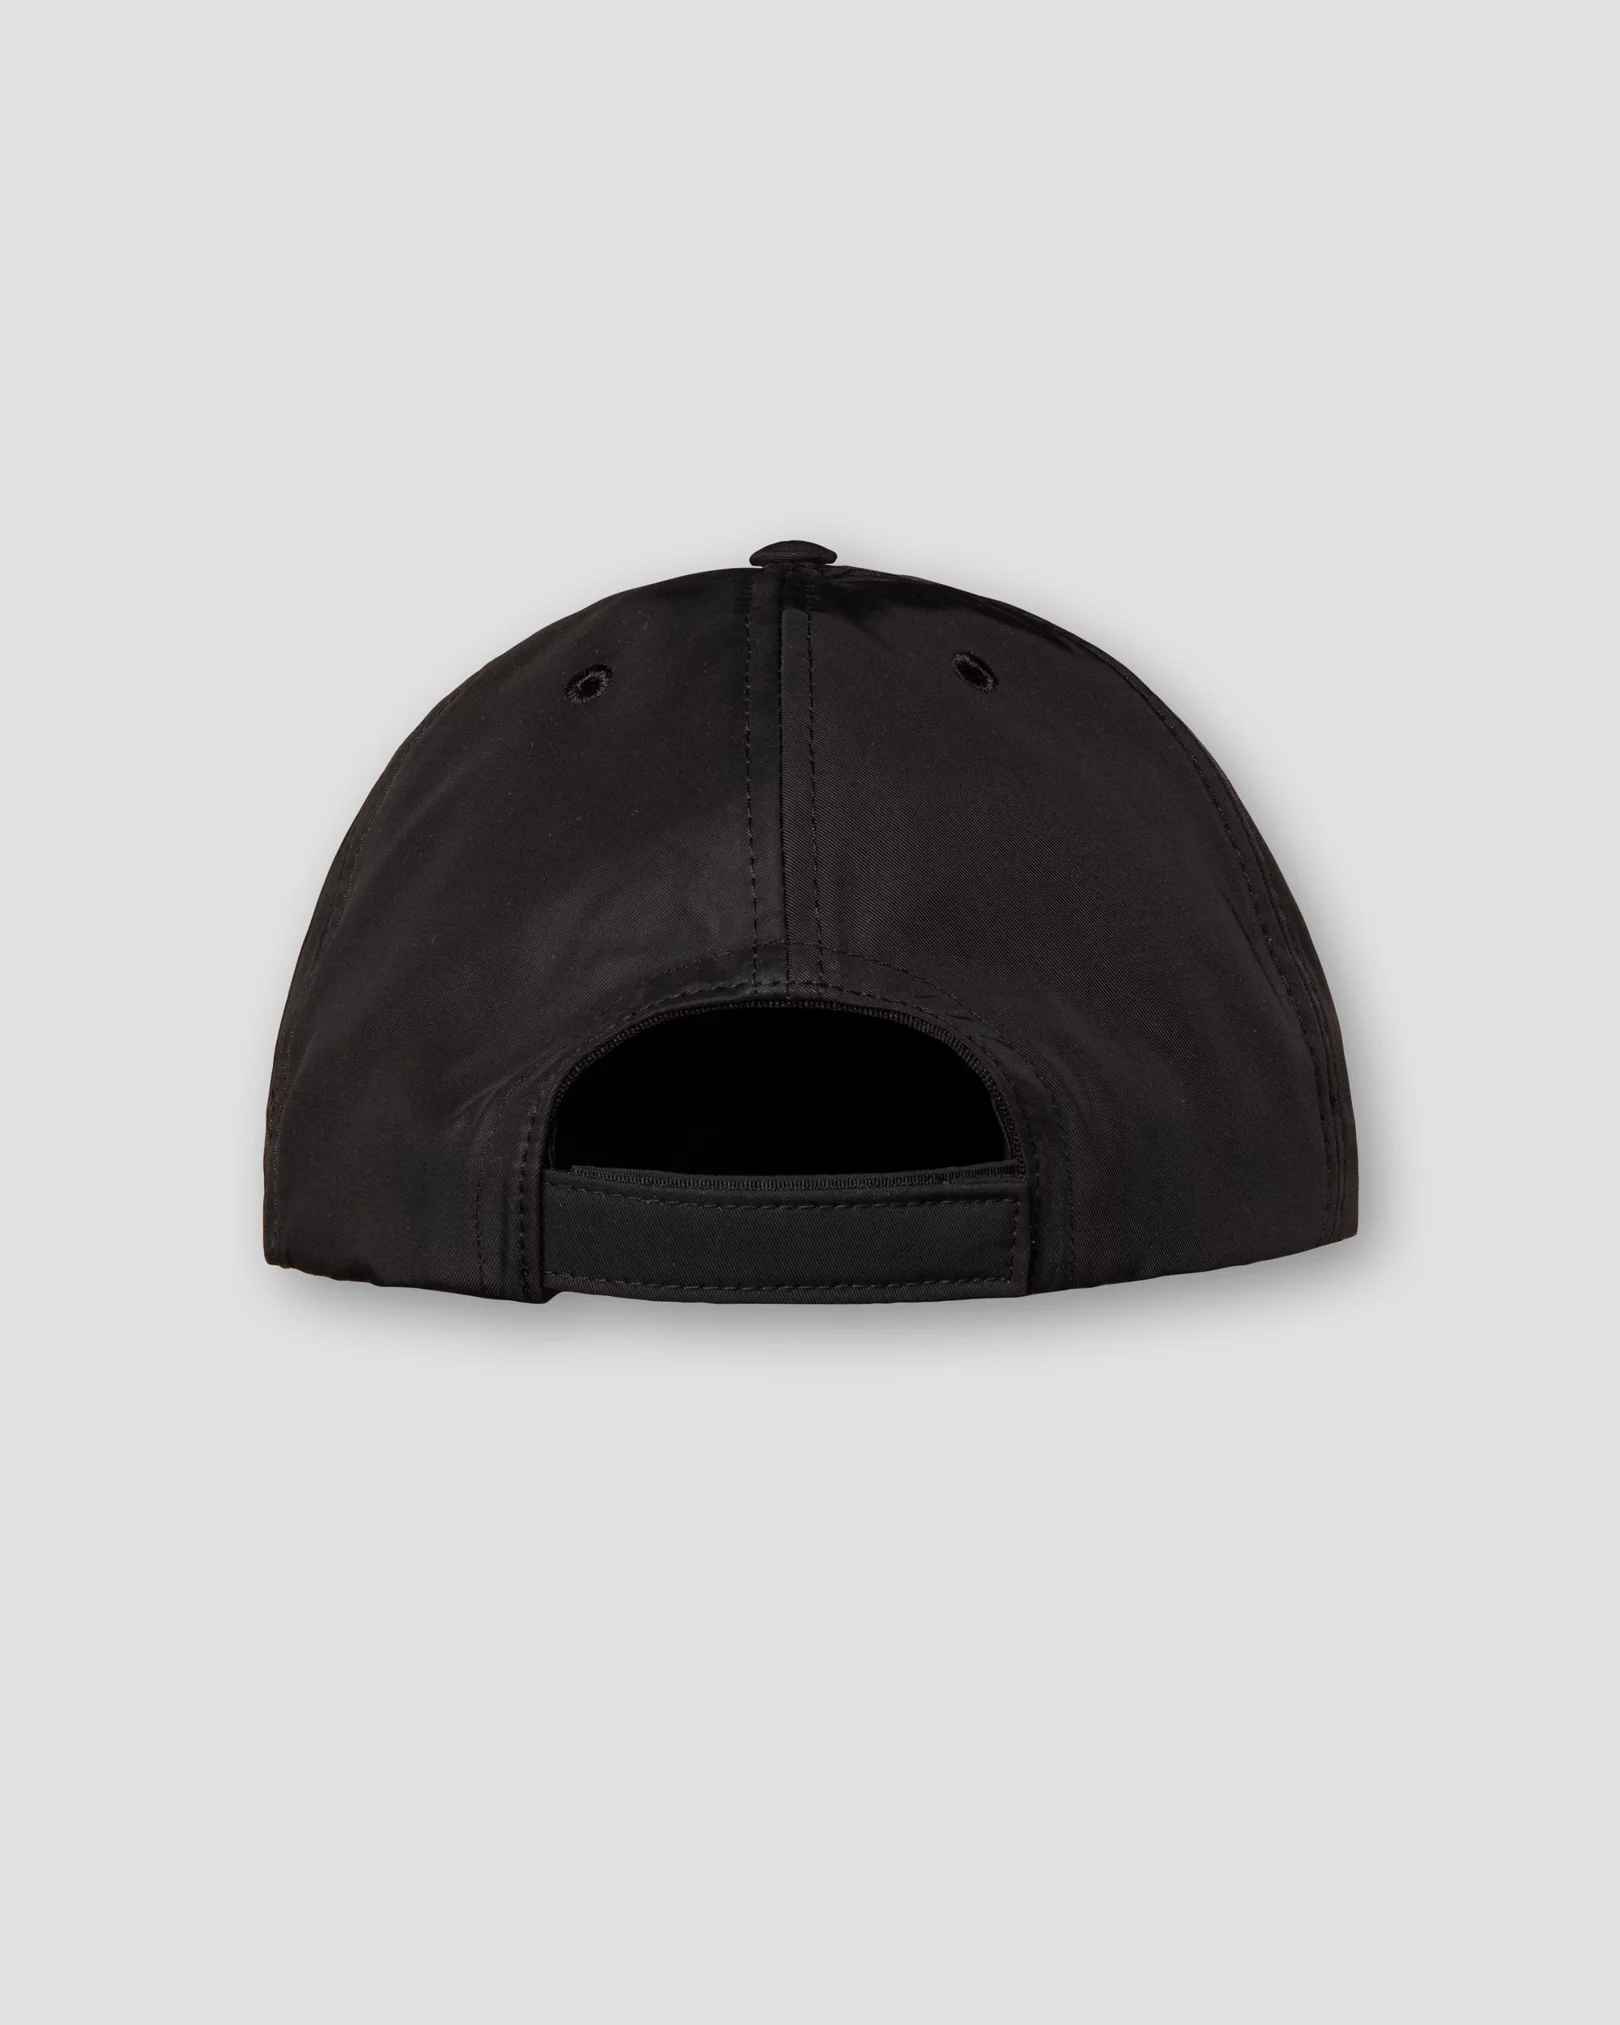 Eton - black nylon cap